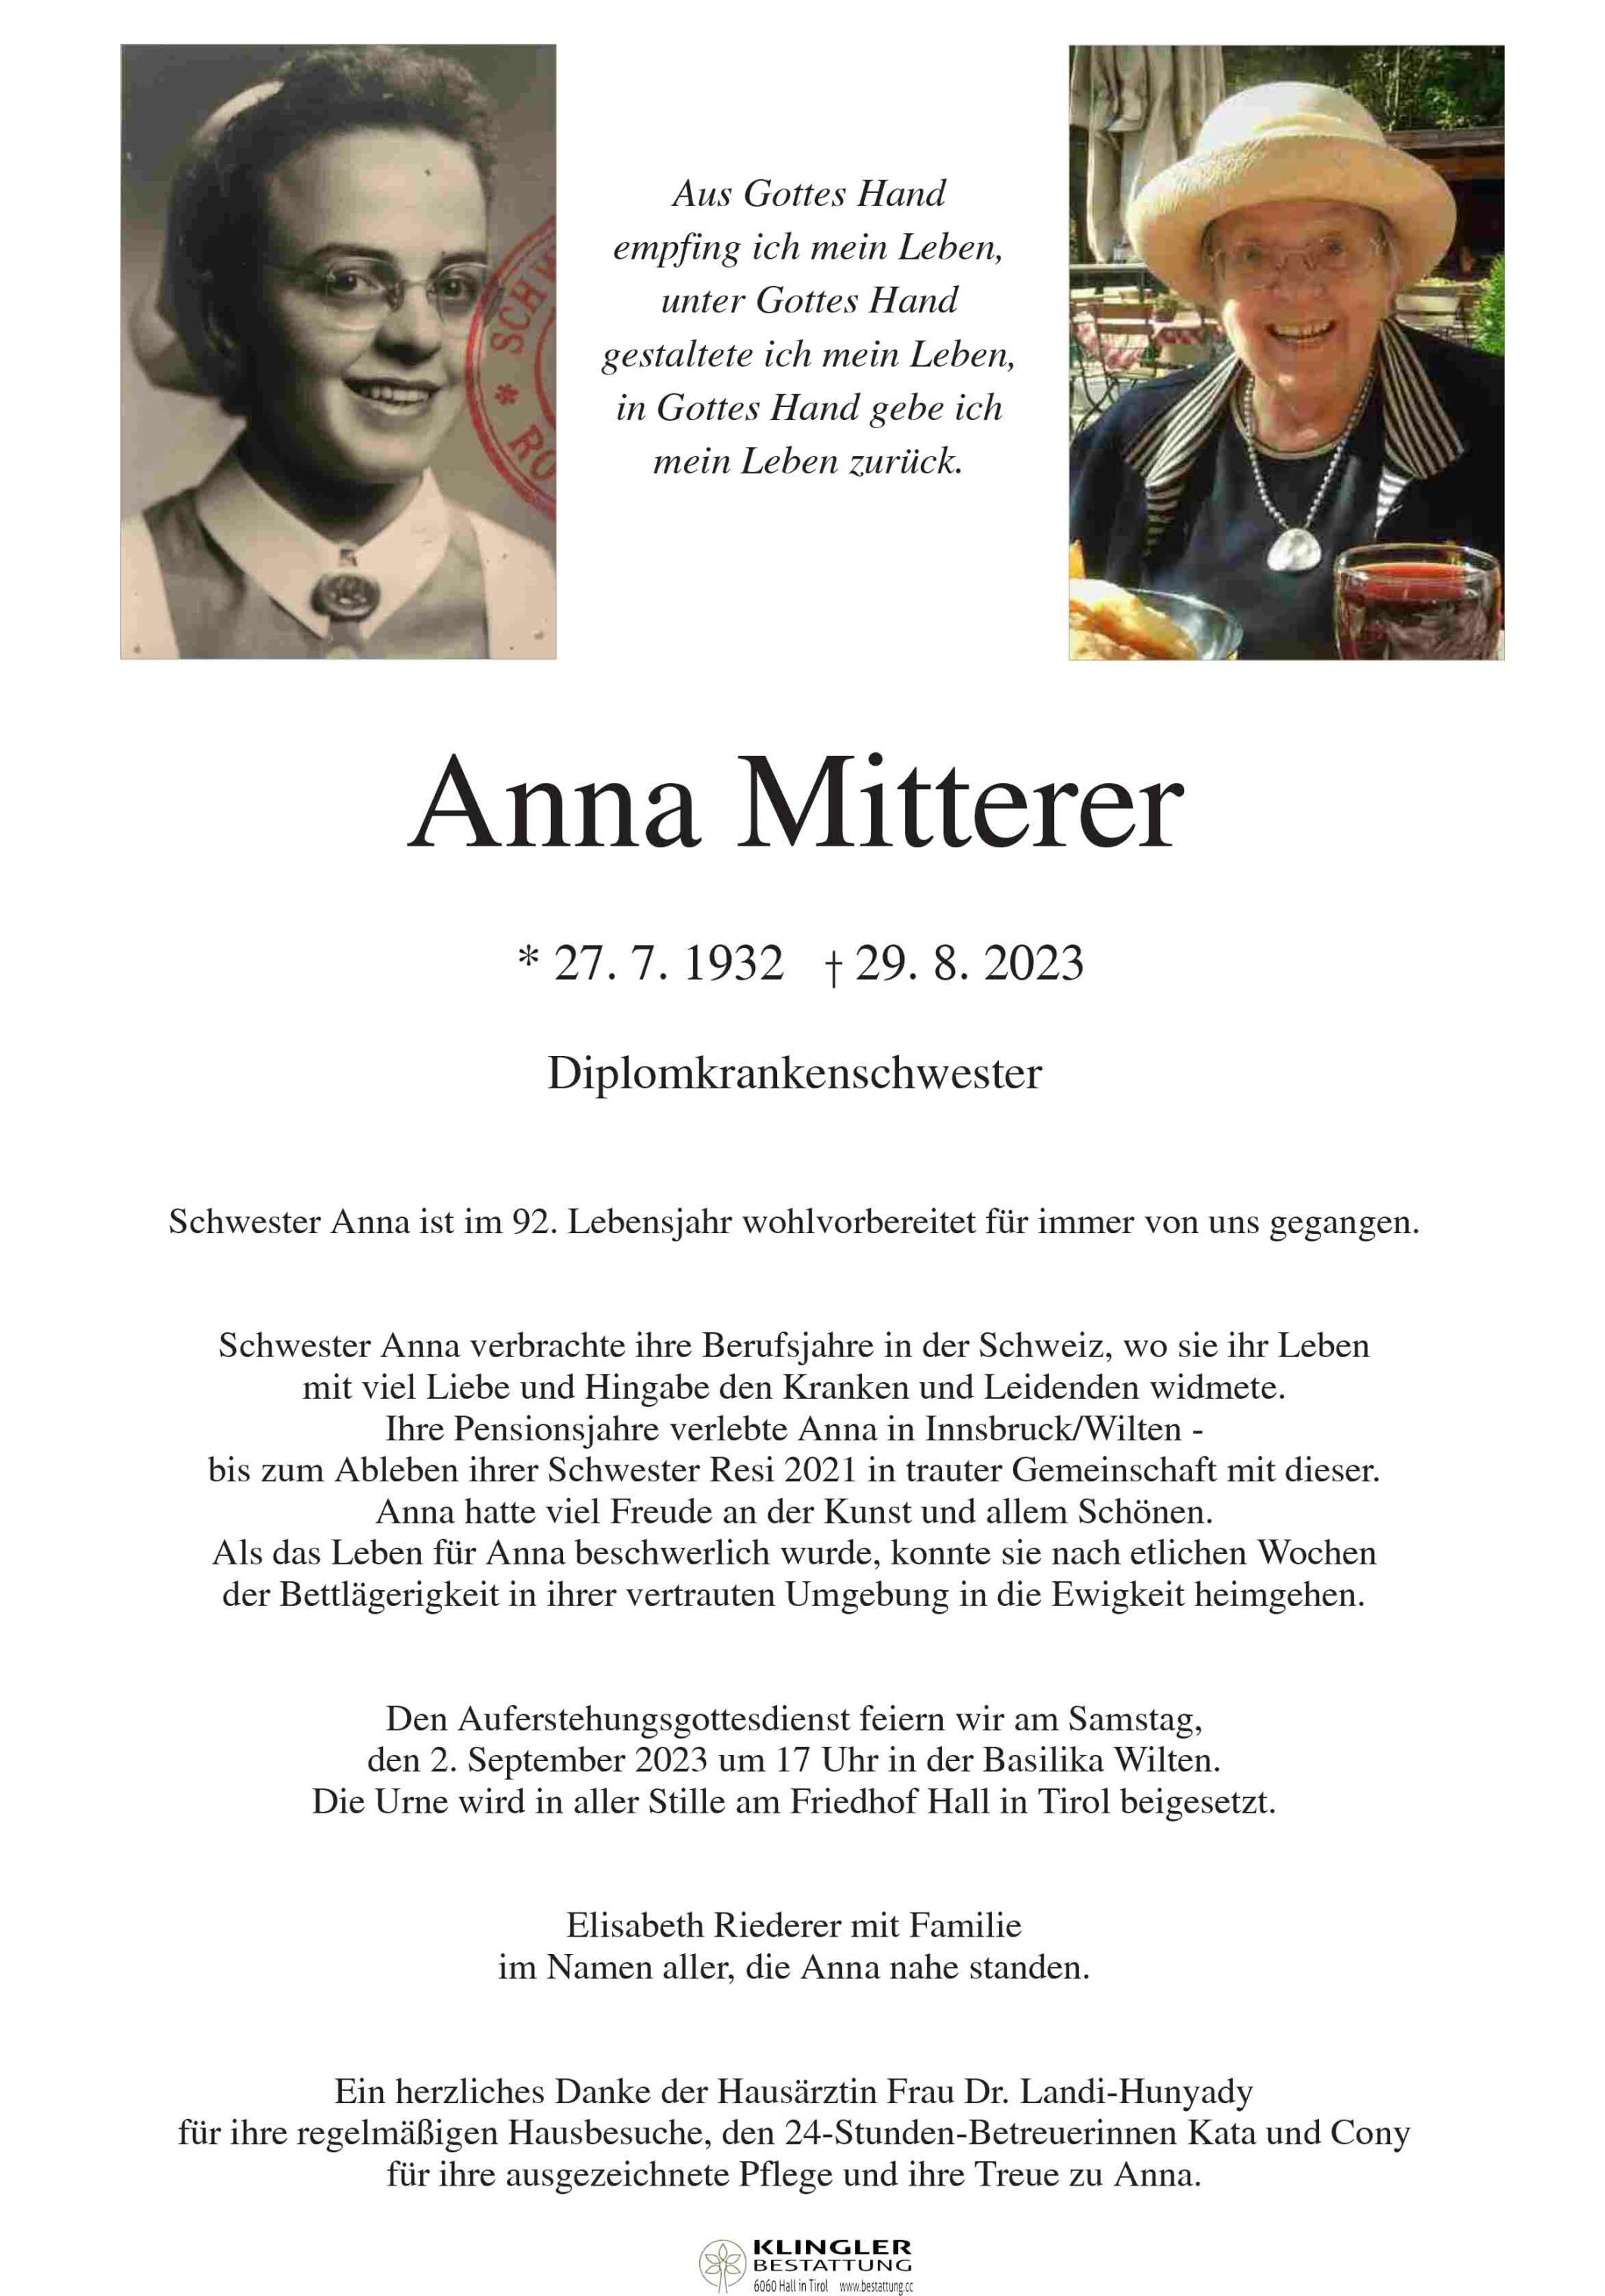 Anna Mitterer